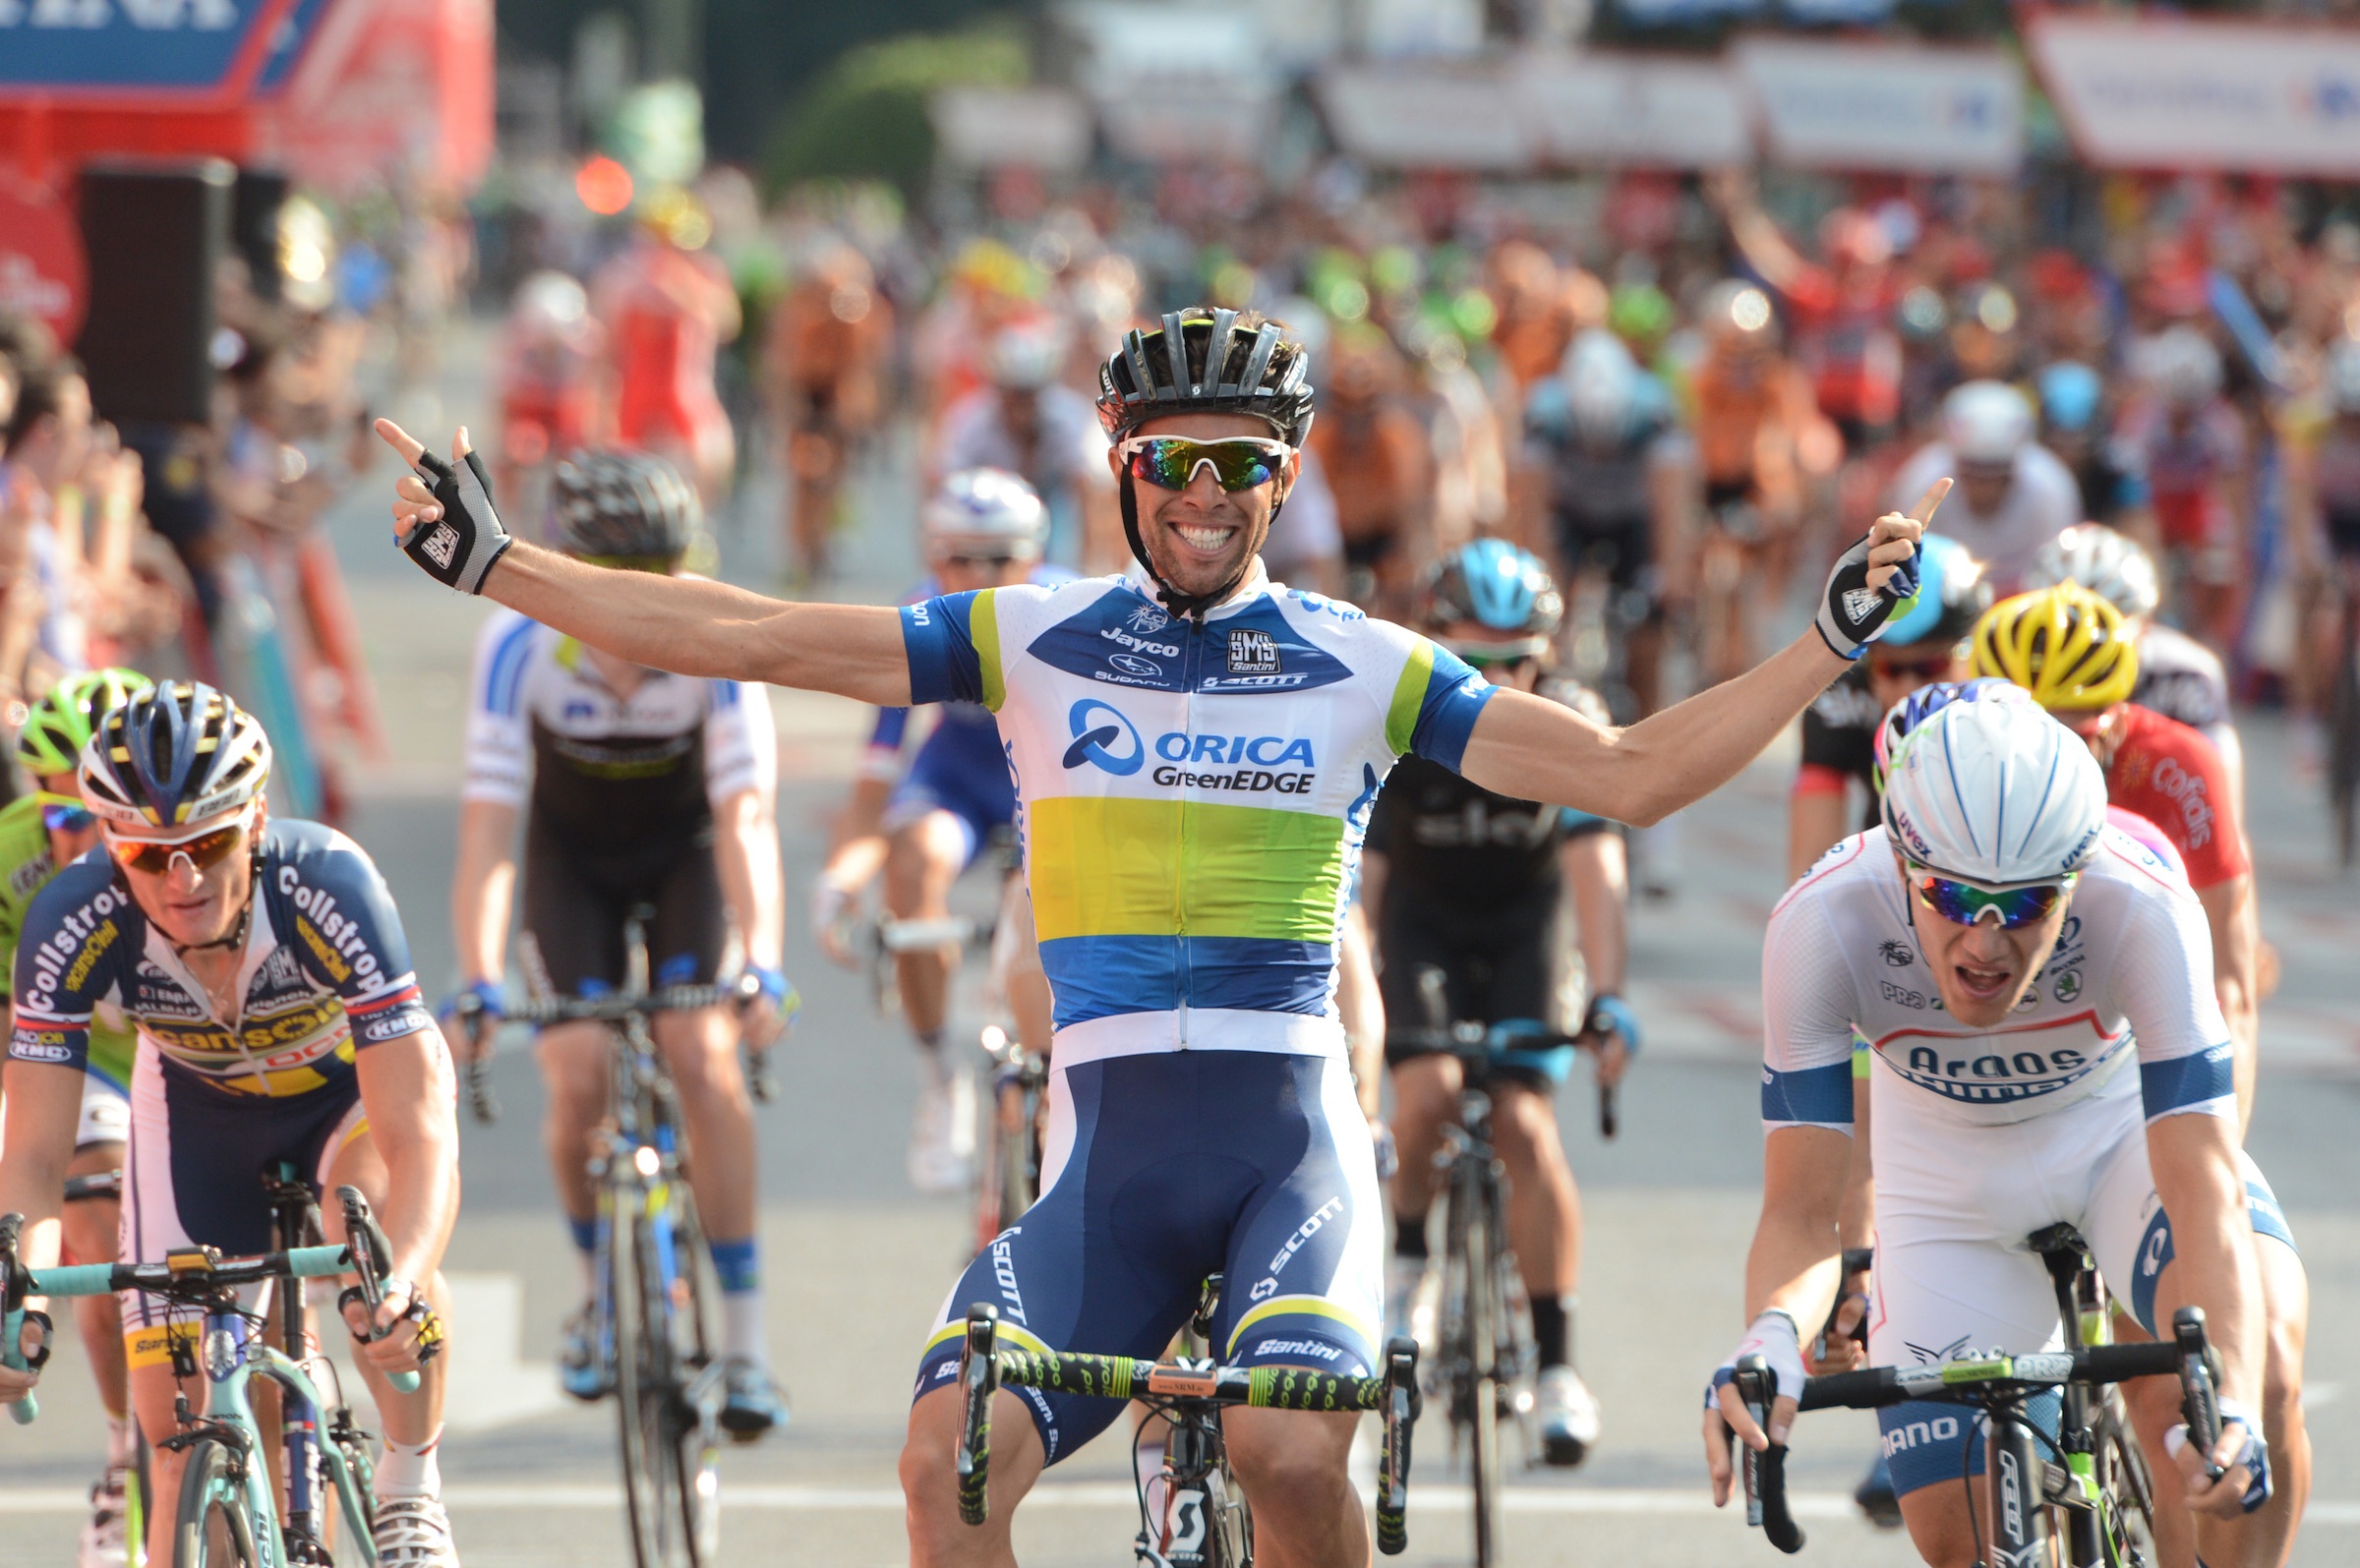 Michael Matthews, Vuelta a Espana 2013, stage 21, pic: ©Stefano Sirotti